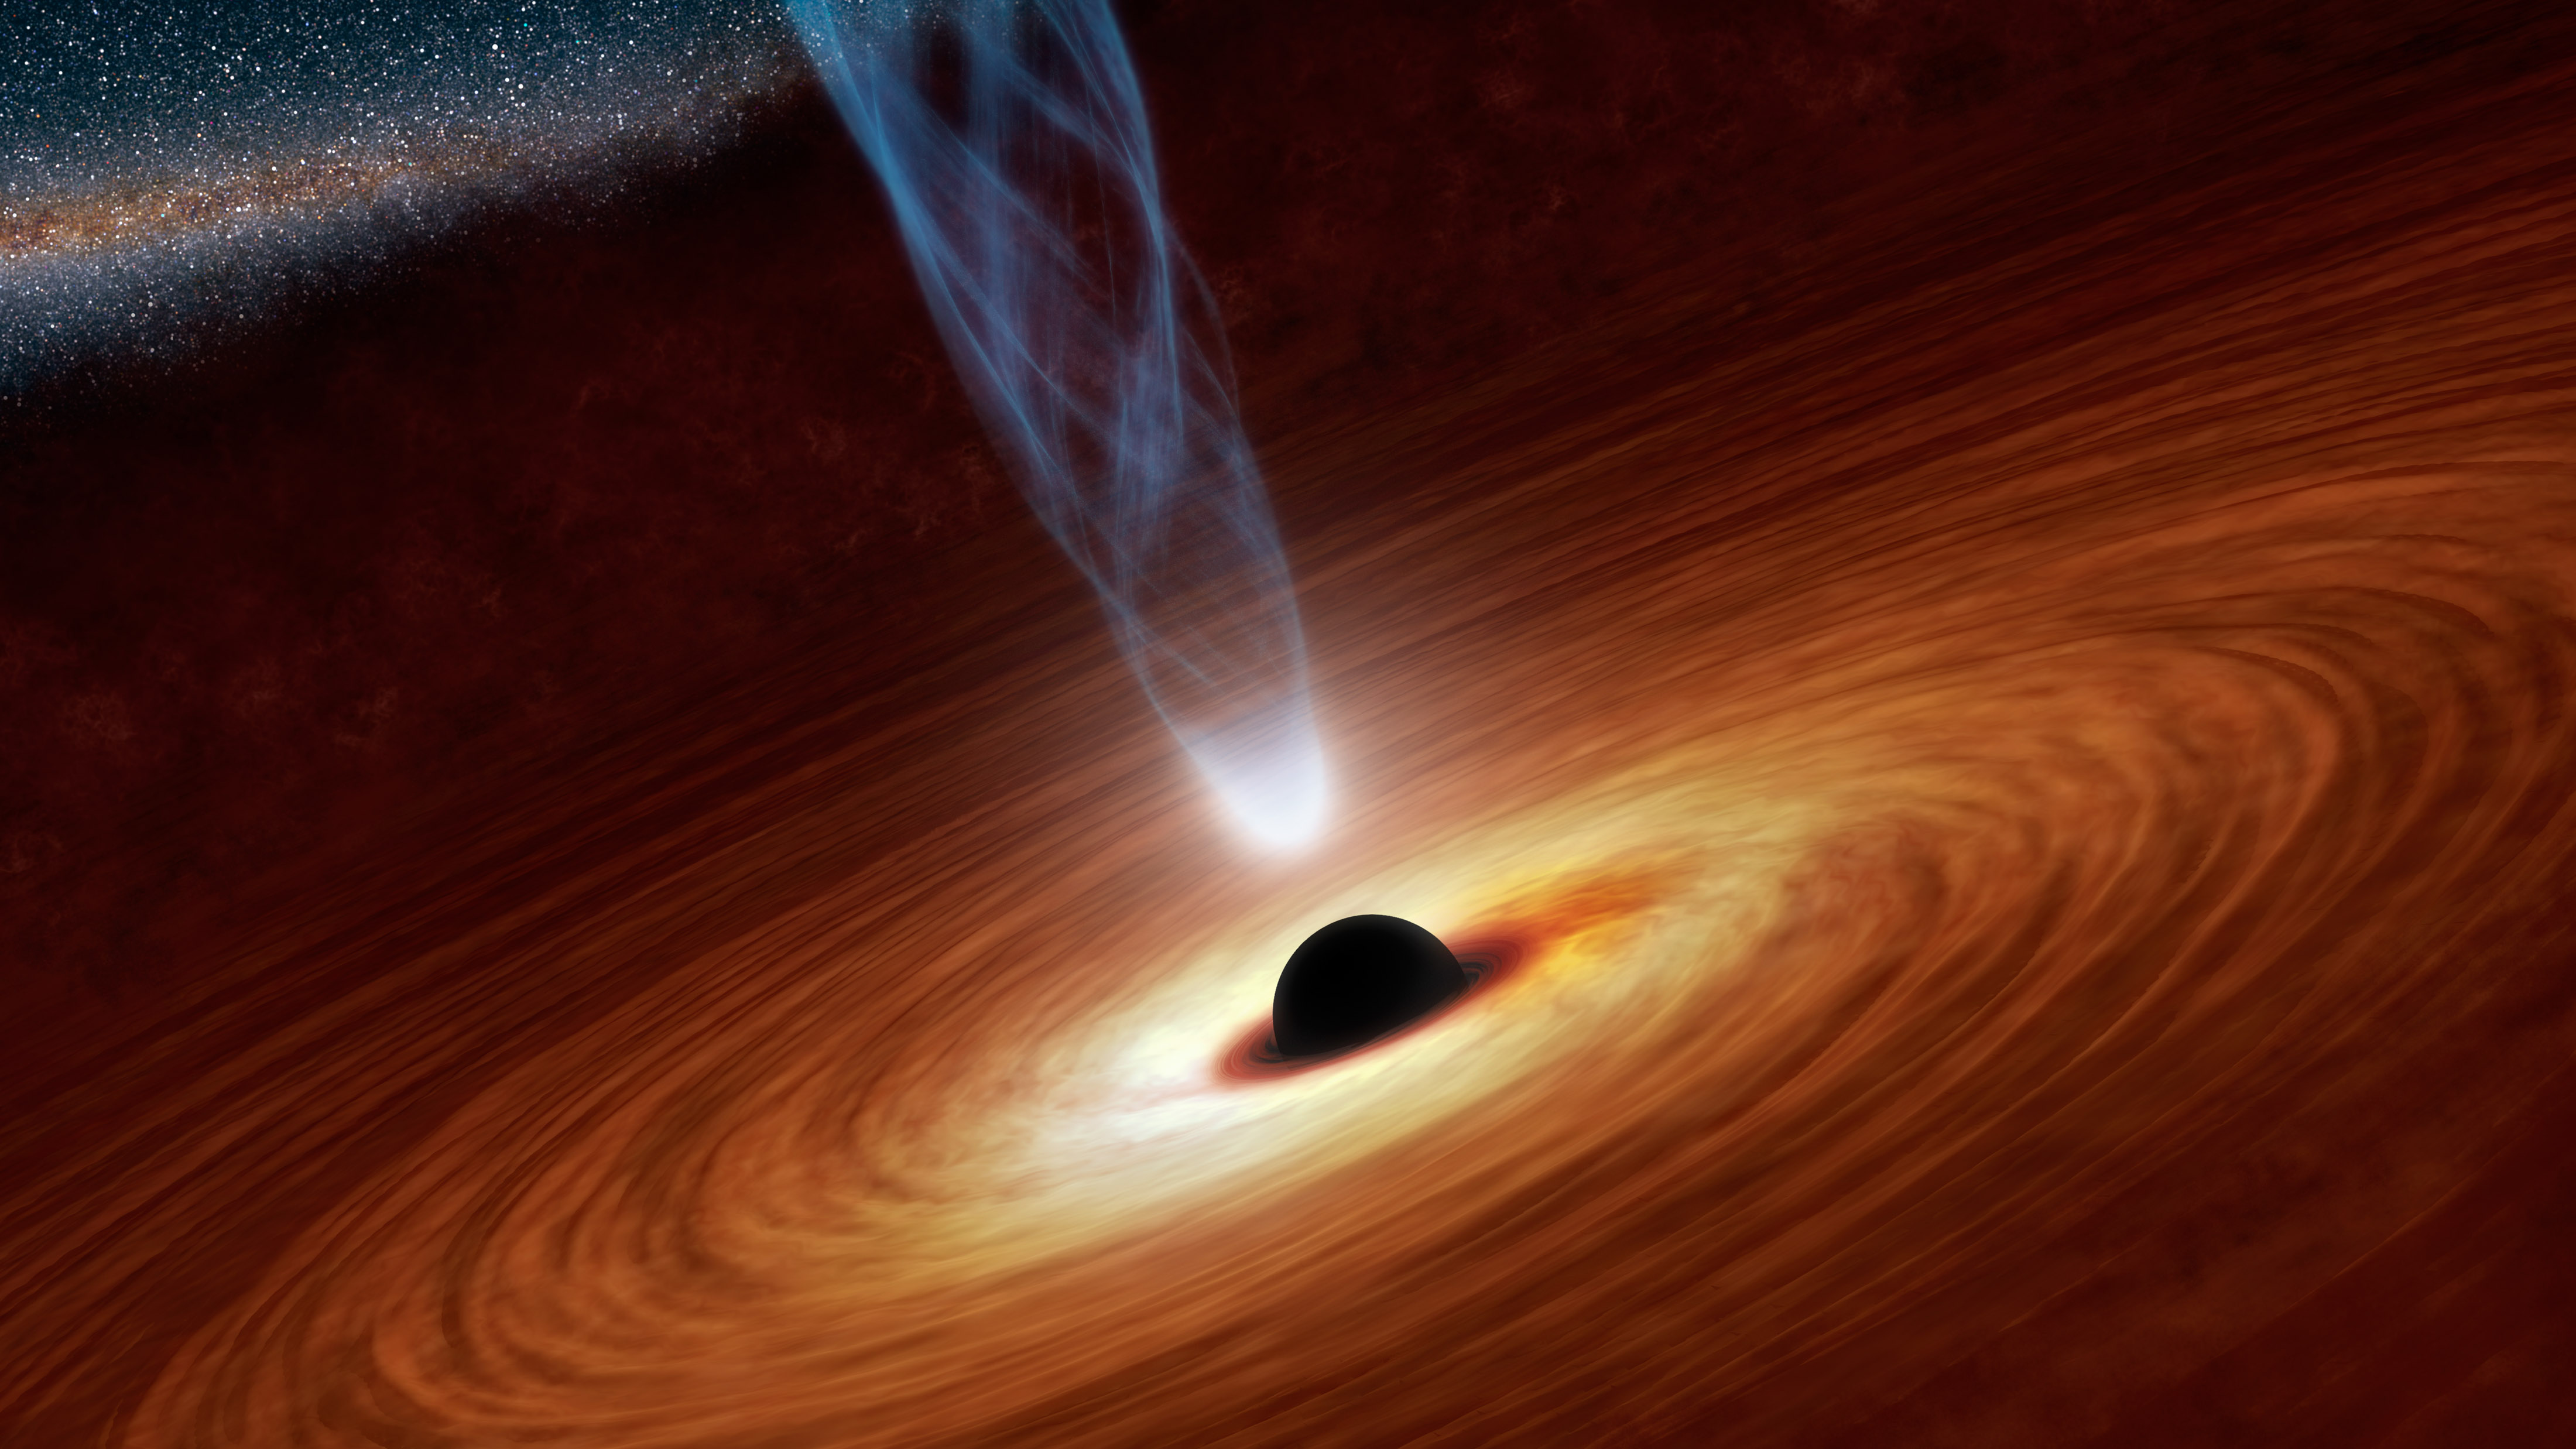 ASASSN-14li: X-Ray Telescopes Catch Monster Black Hole Devouring a Star